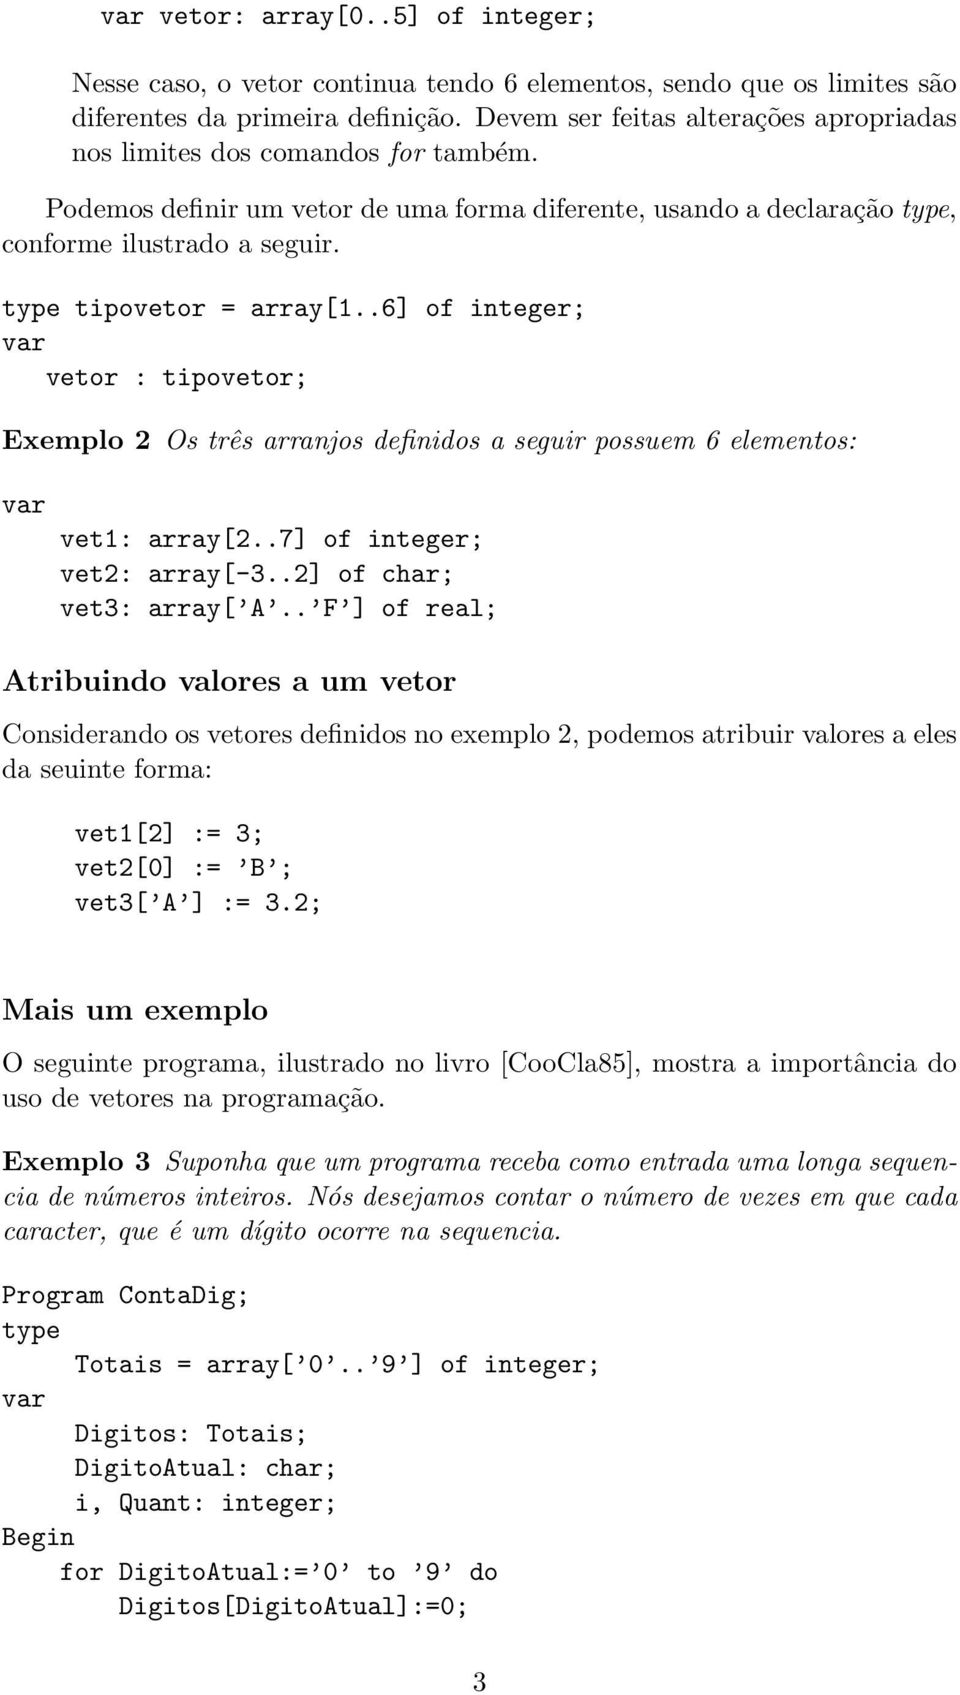 type tipovetor = array[1..6] of integer; vetor : tipovetor; Exemplo 2 Os três arranjos definidos a seguir possuem 6 elementos: vet1: array[2..7] of integer; vet2: array[-3..2] of char; vet3: array[ A.